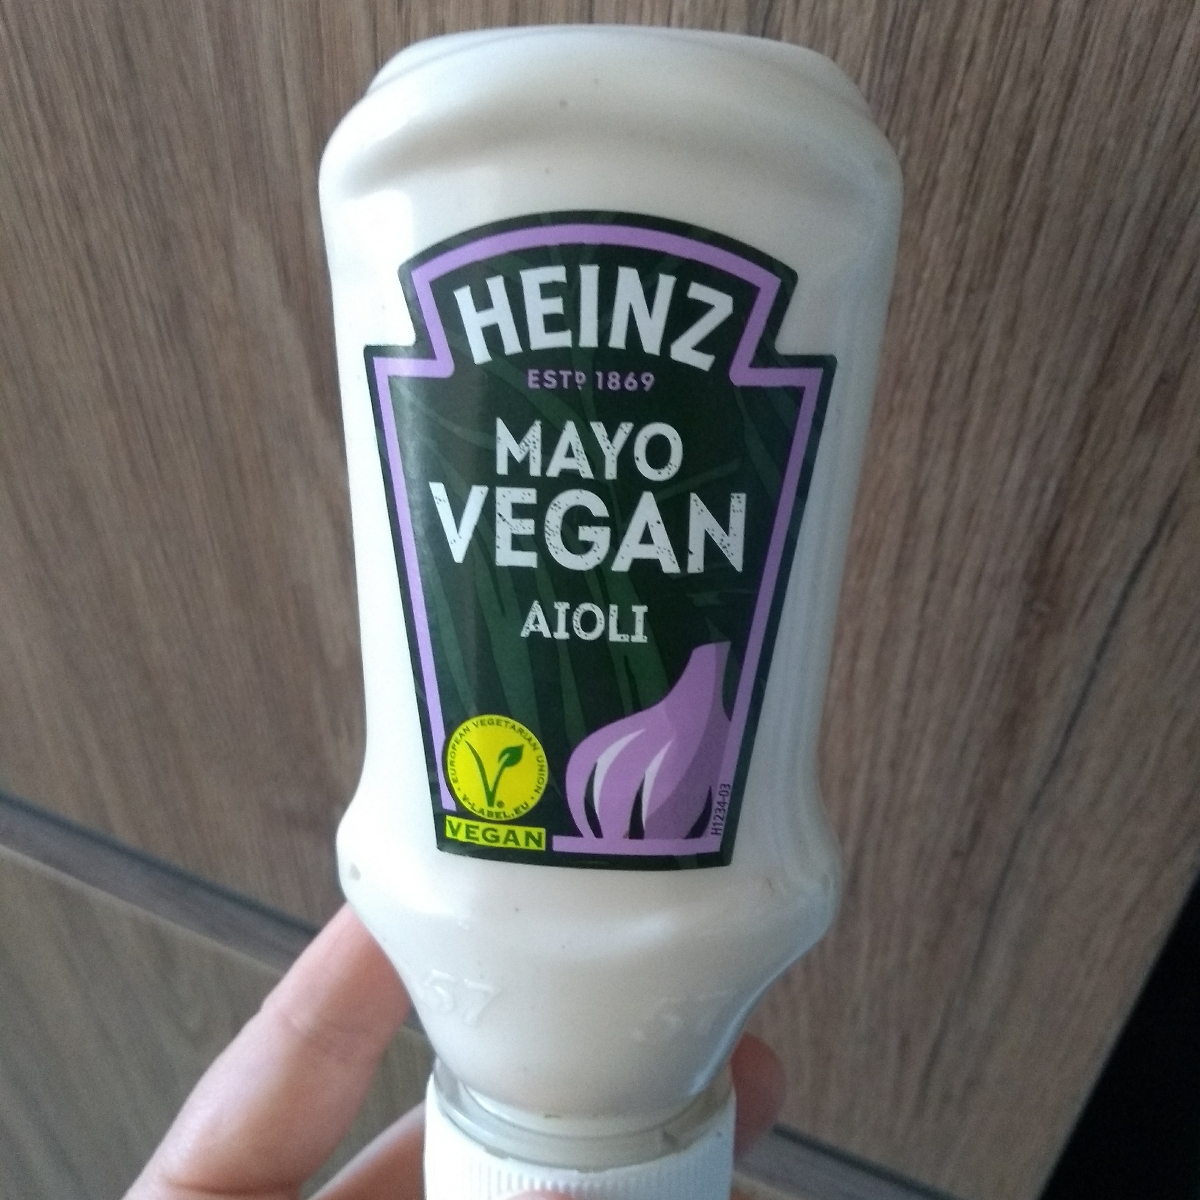 Heinz Vegan Mayo Garlic Aioli Reviews